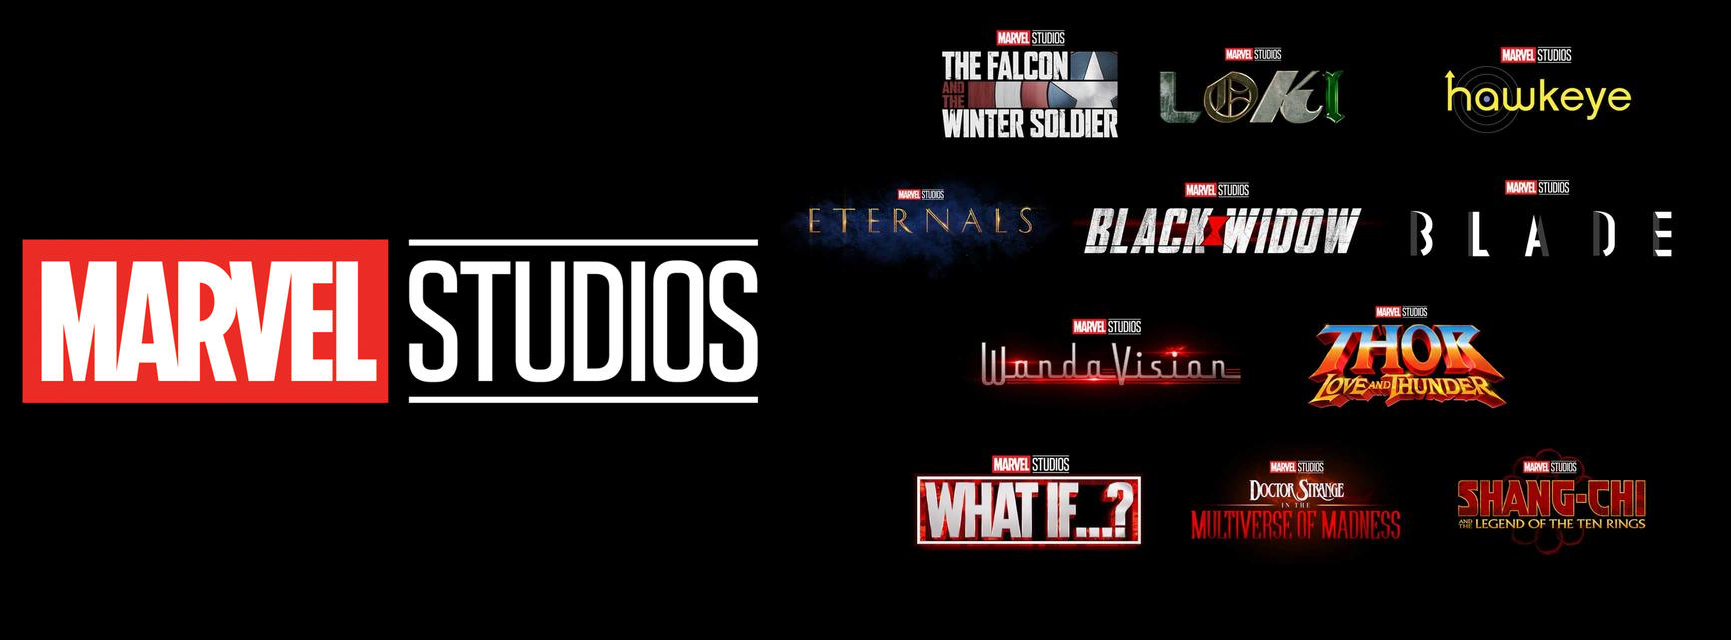 Marvel Studios' Fase 4 annunciata al SDCC 2019